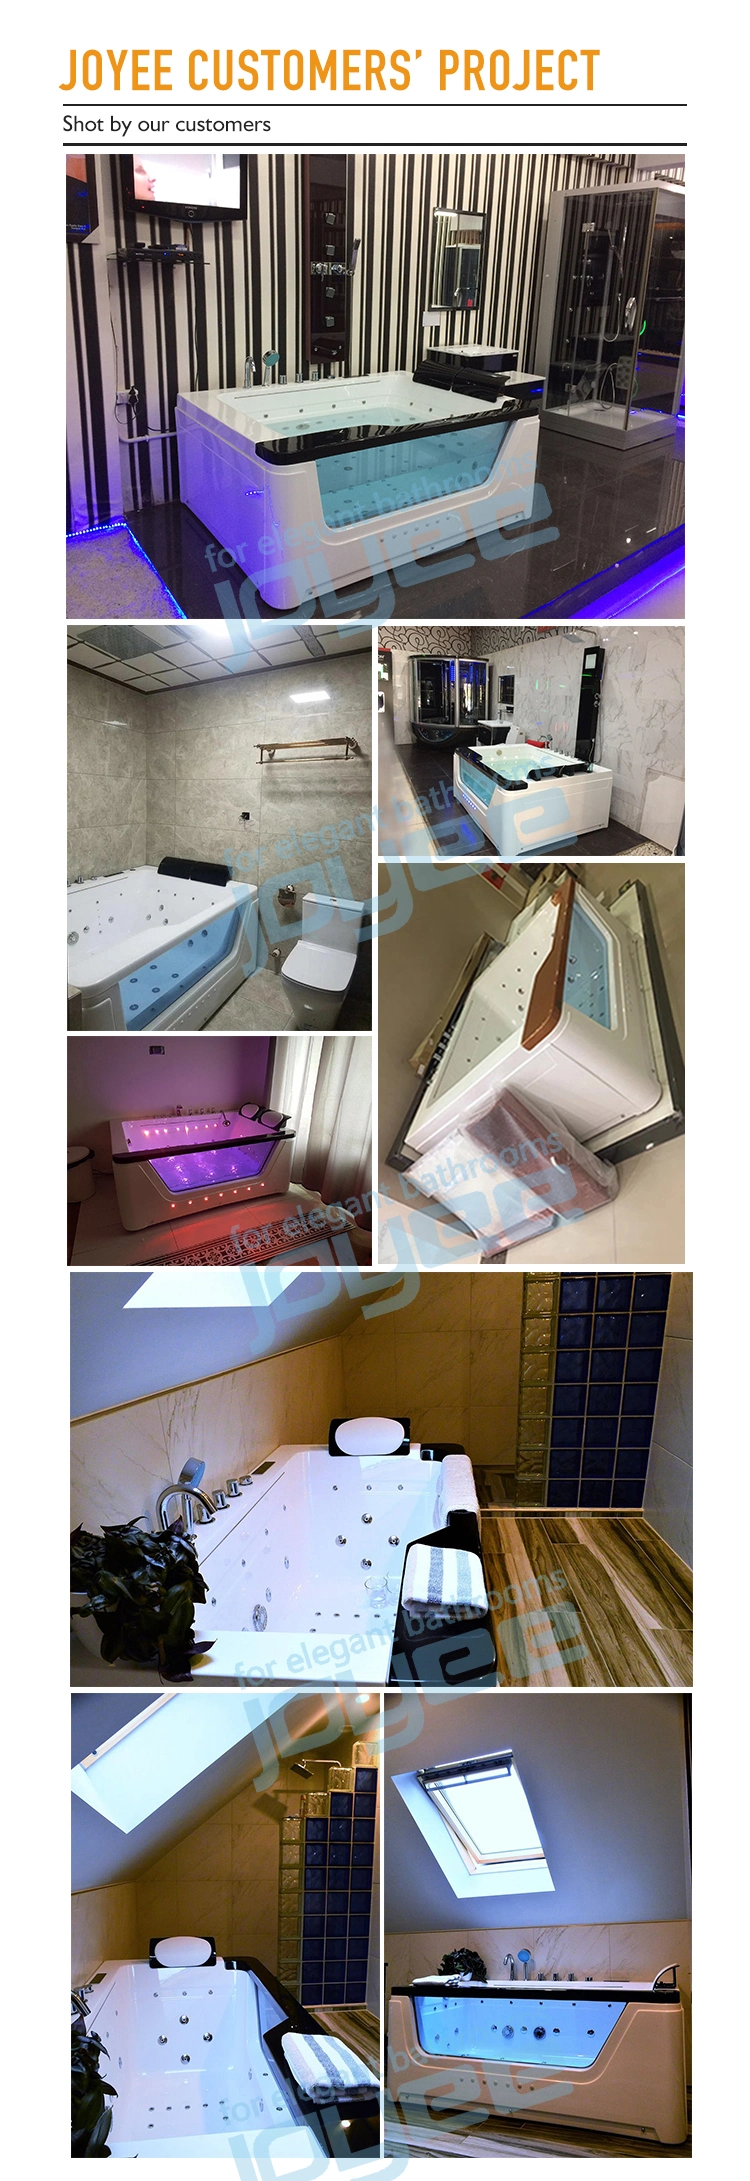 Joyee Indoor Portable Bathtub Jacuzzi Hot Tub with Air Jets Whirlpool Bathtub Indoor Use